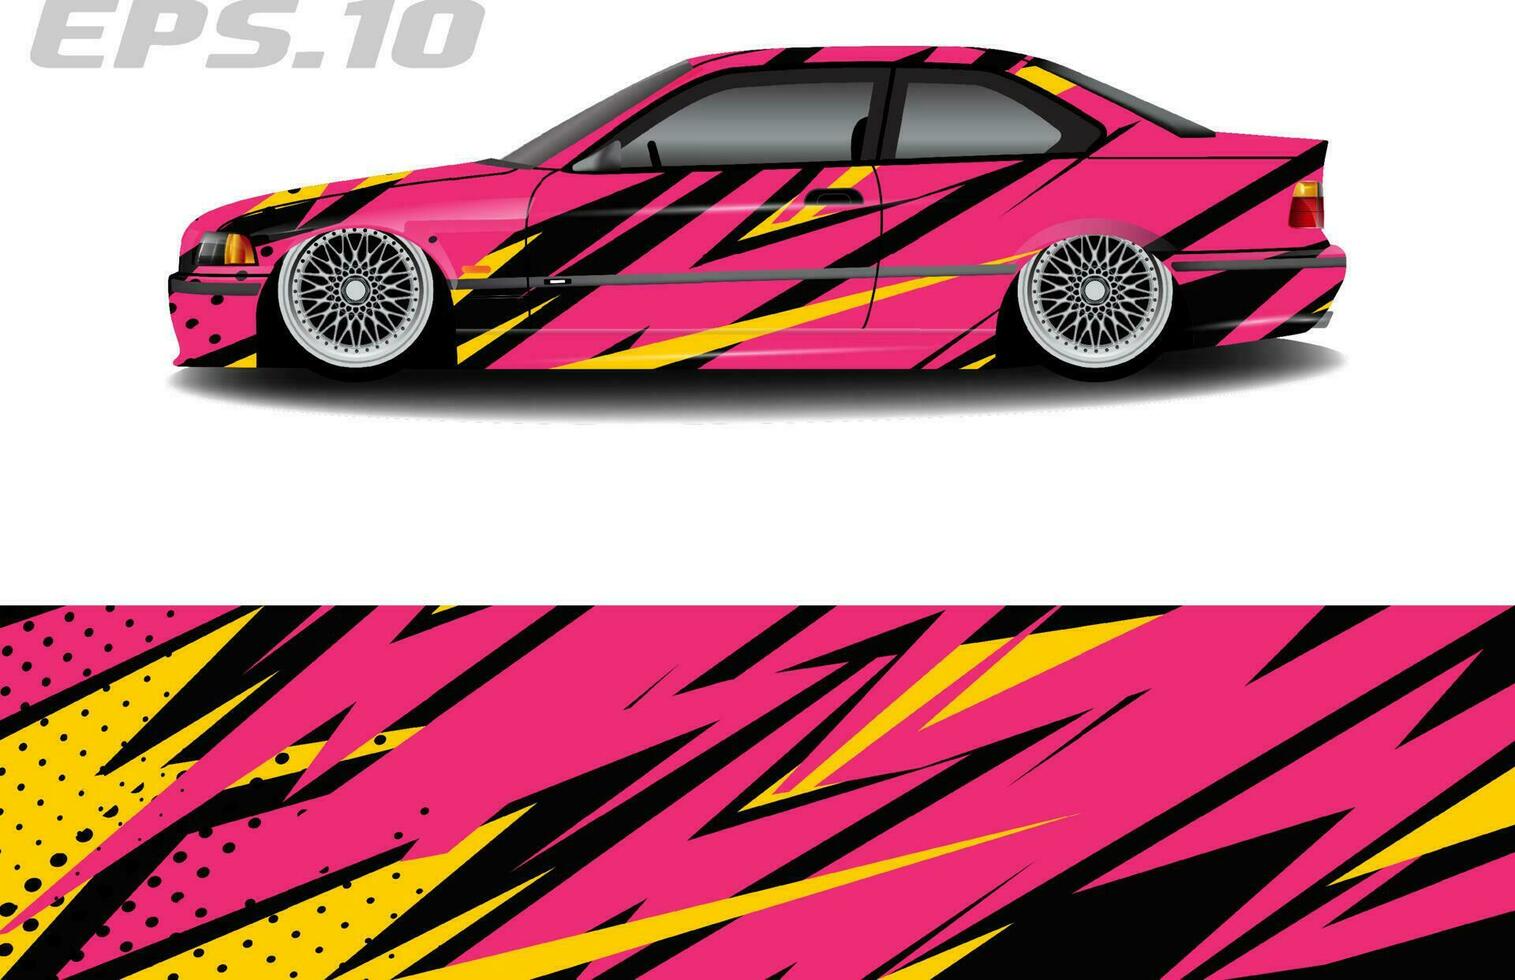 diseño de pegatinas de coches de carreras de librea de pegatinas, fondo gráfico abstracto fresco vector